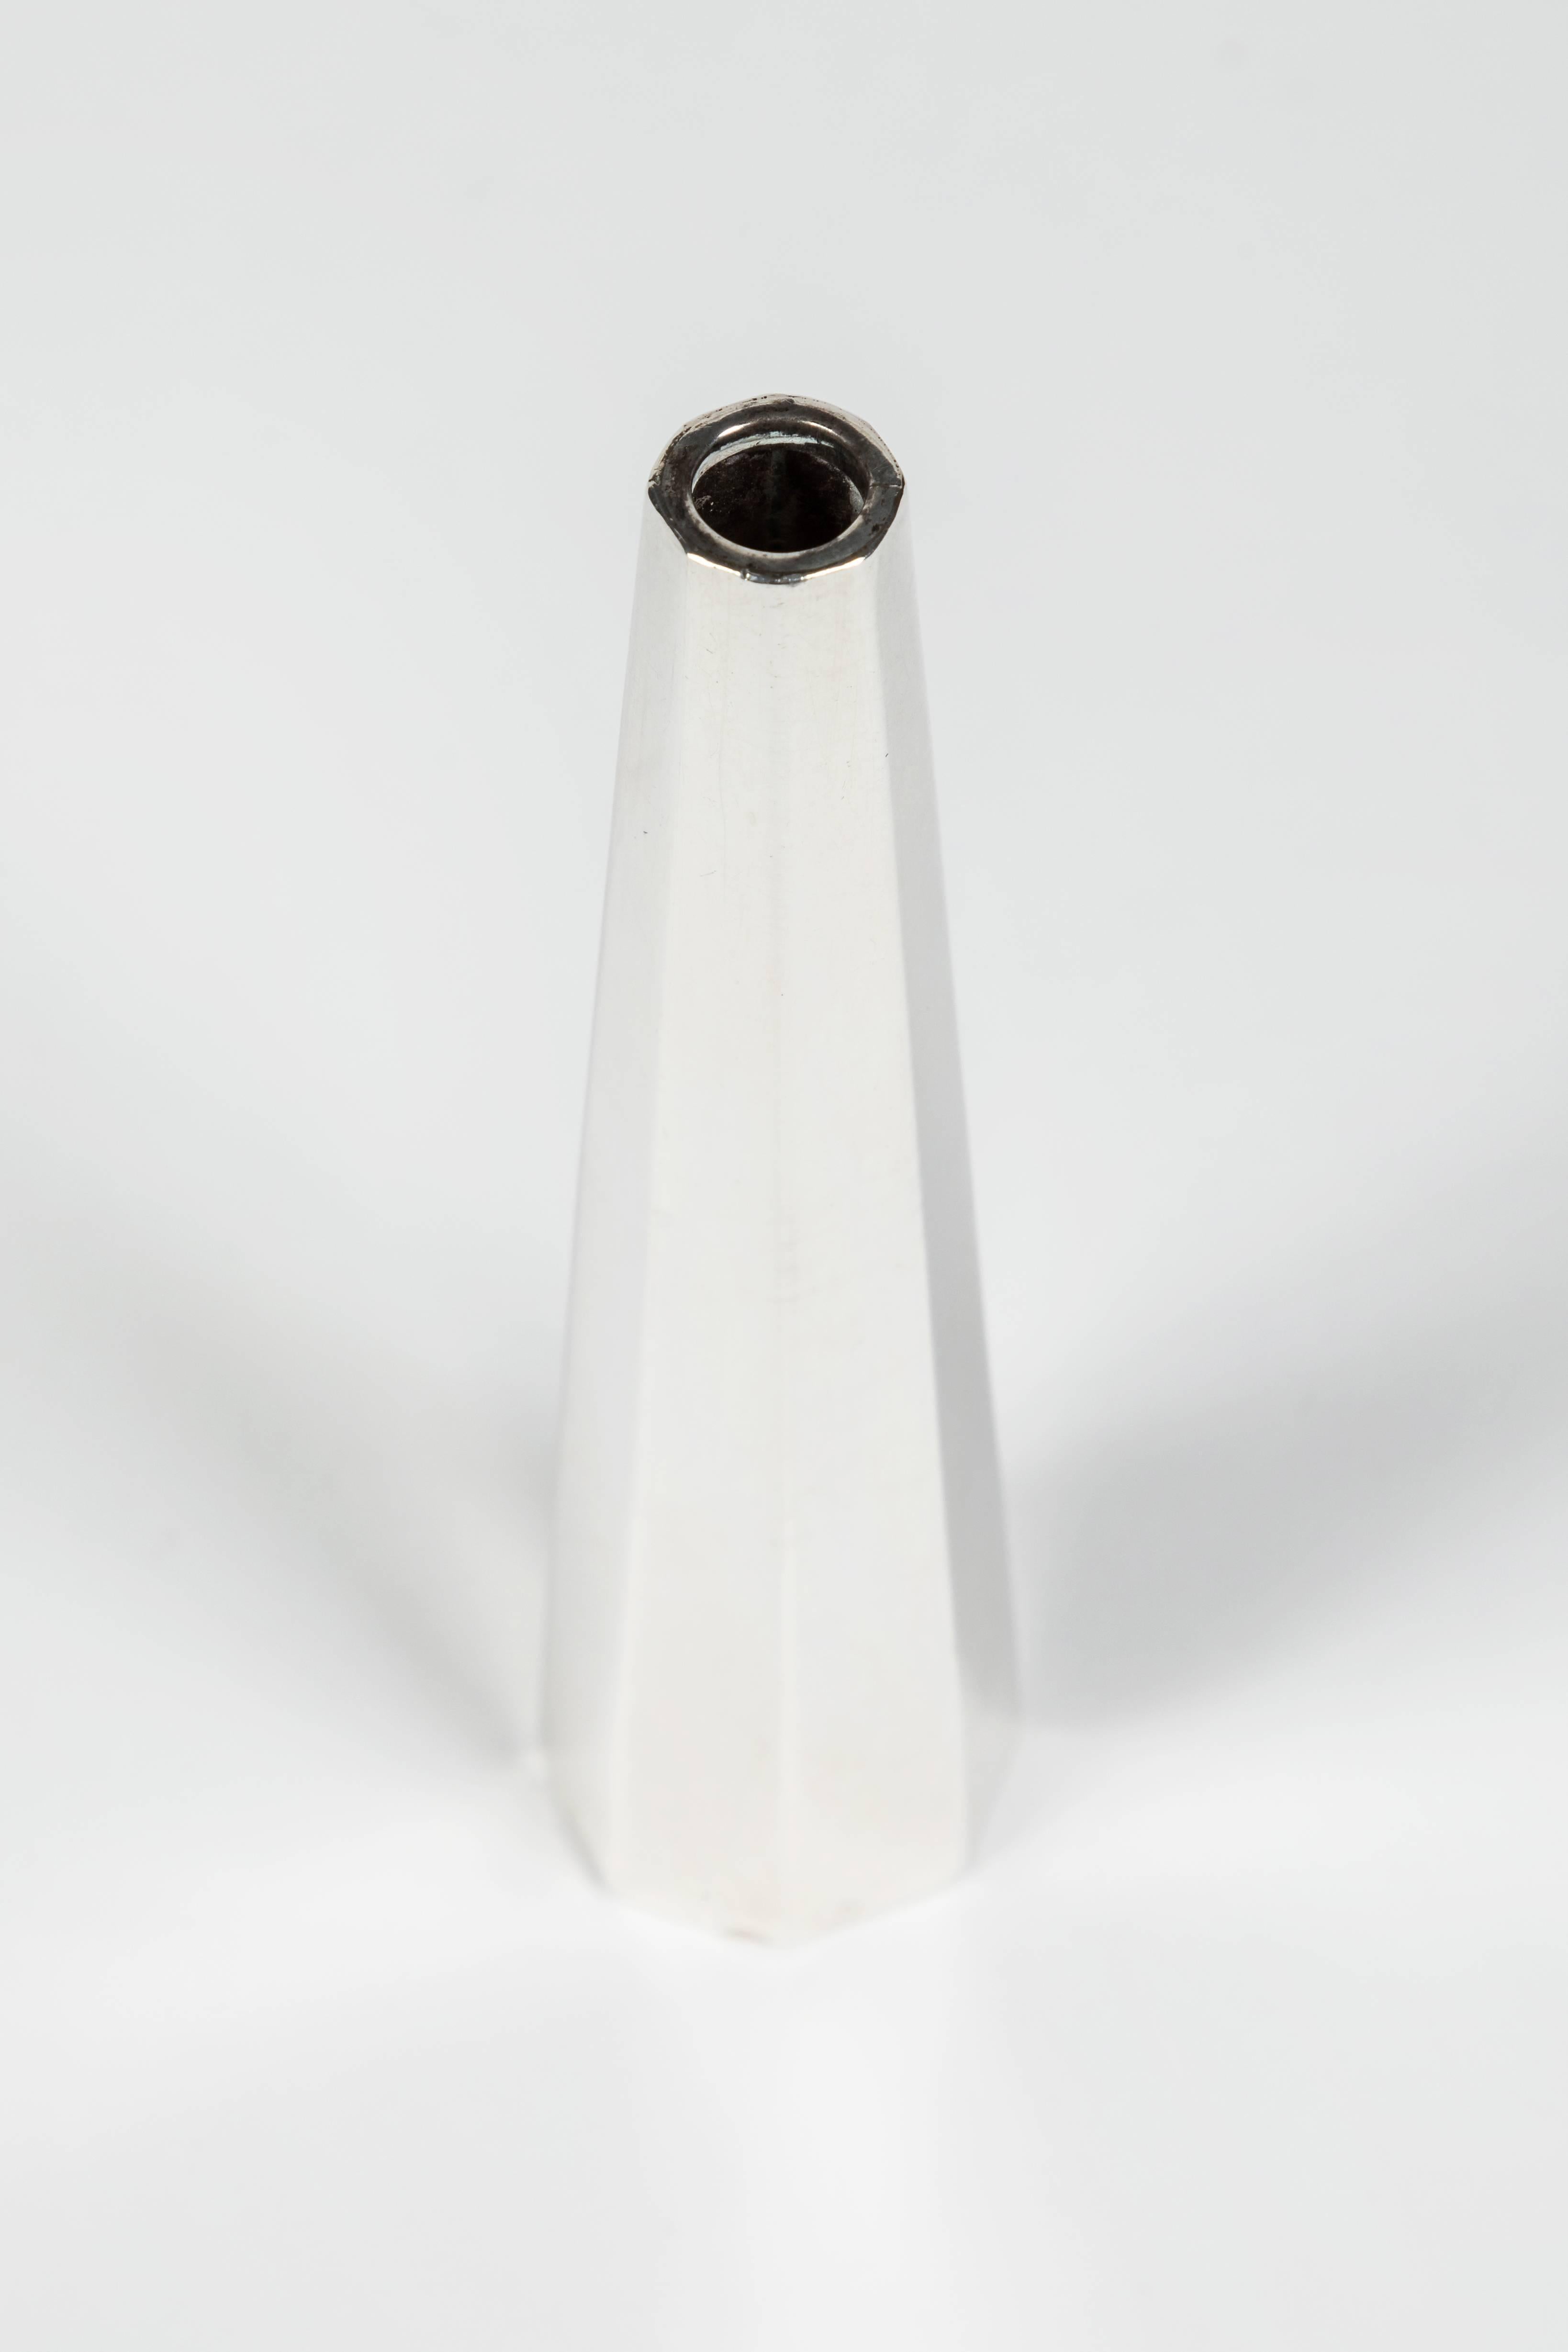 Beautiful handmade octagonal-shaped sterling silver bud vase. Stamped 